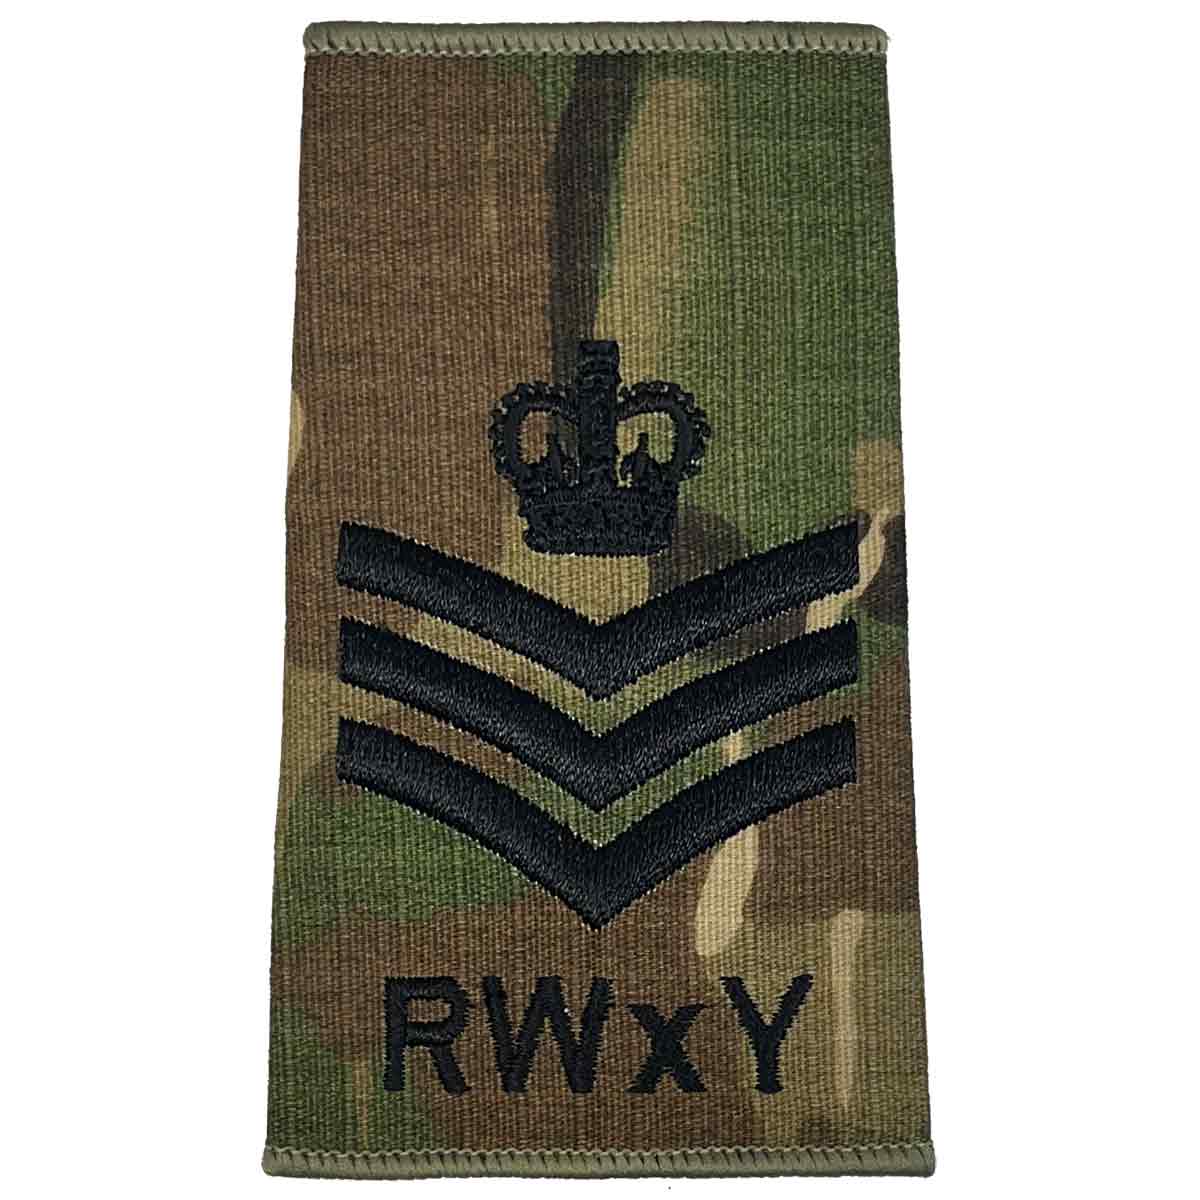 Royal Wessex Yeomanry RWxY Multicam Rank Slides (Pair) - John Bull Clothing